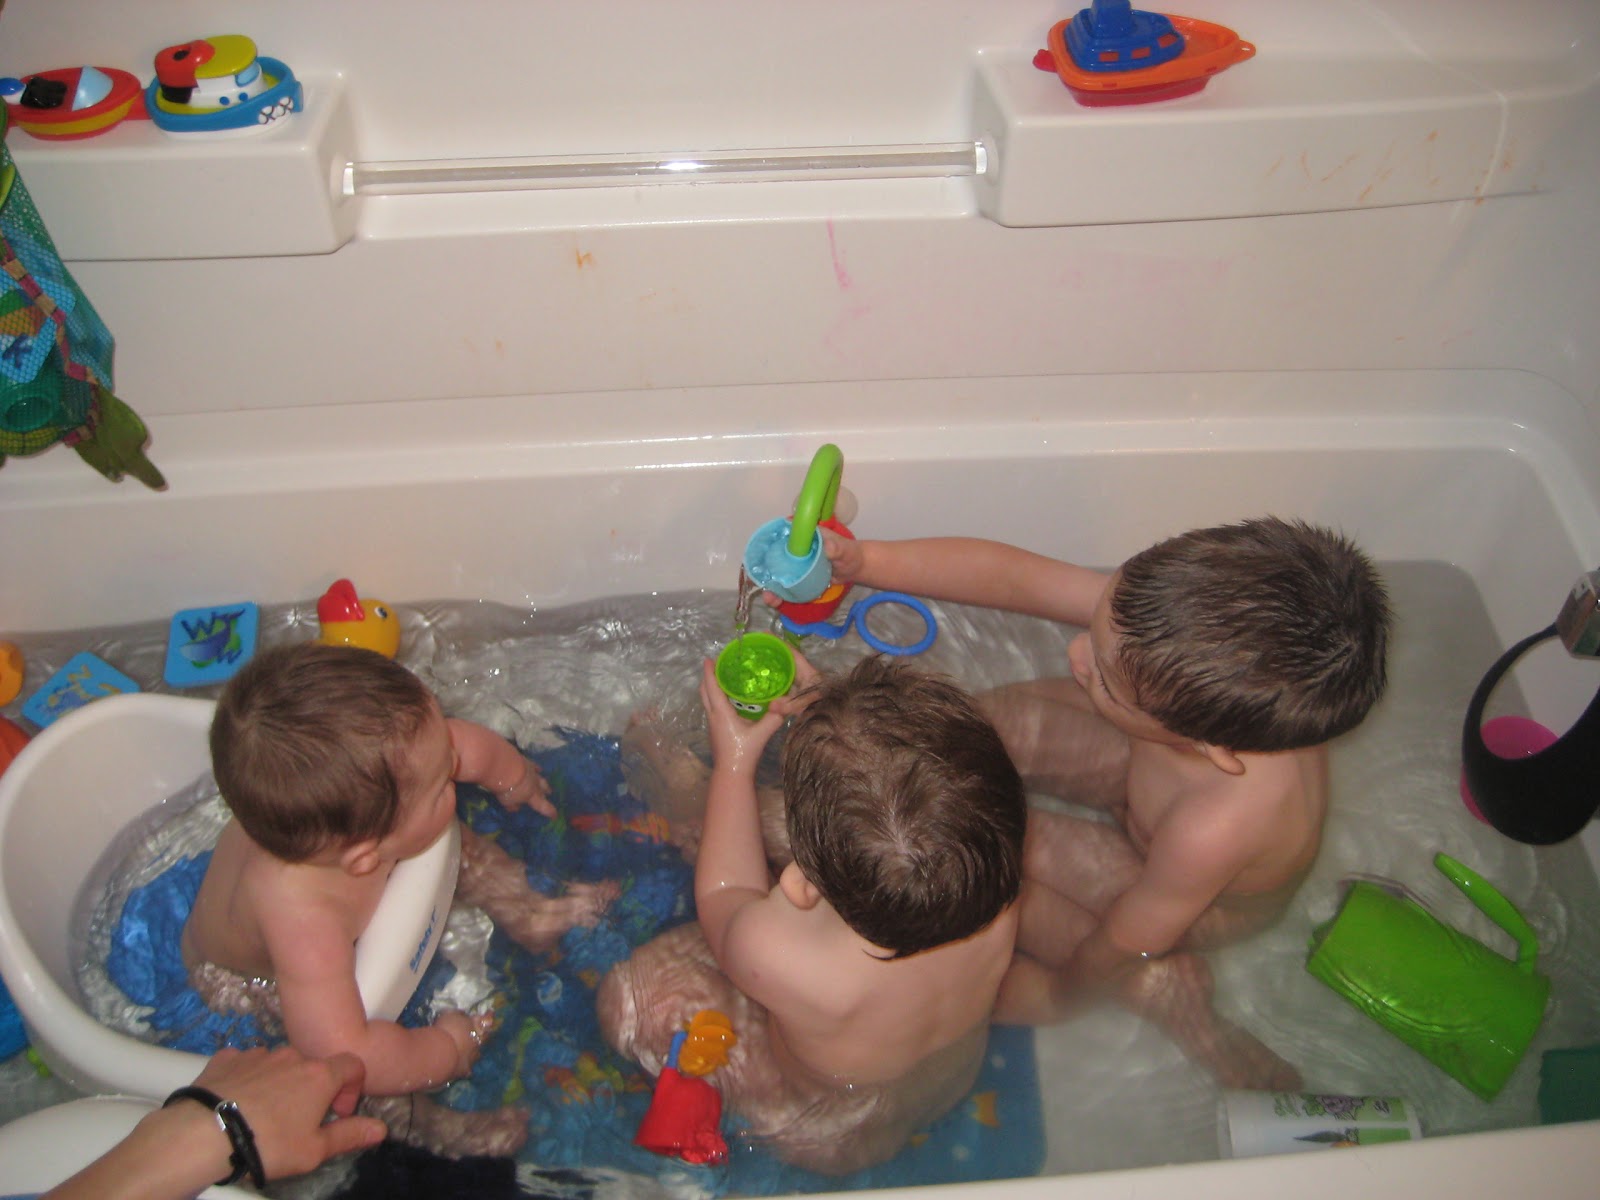 Boys having fun in bathrooms